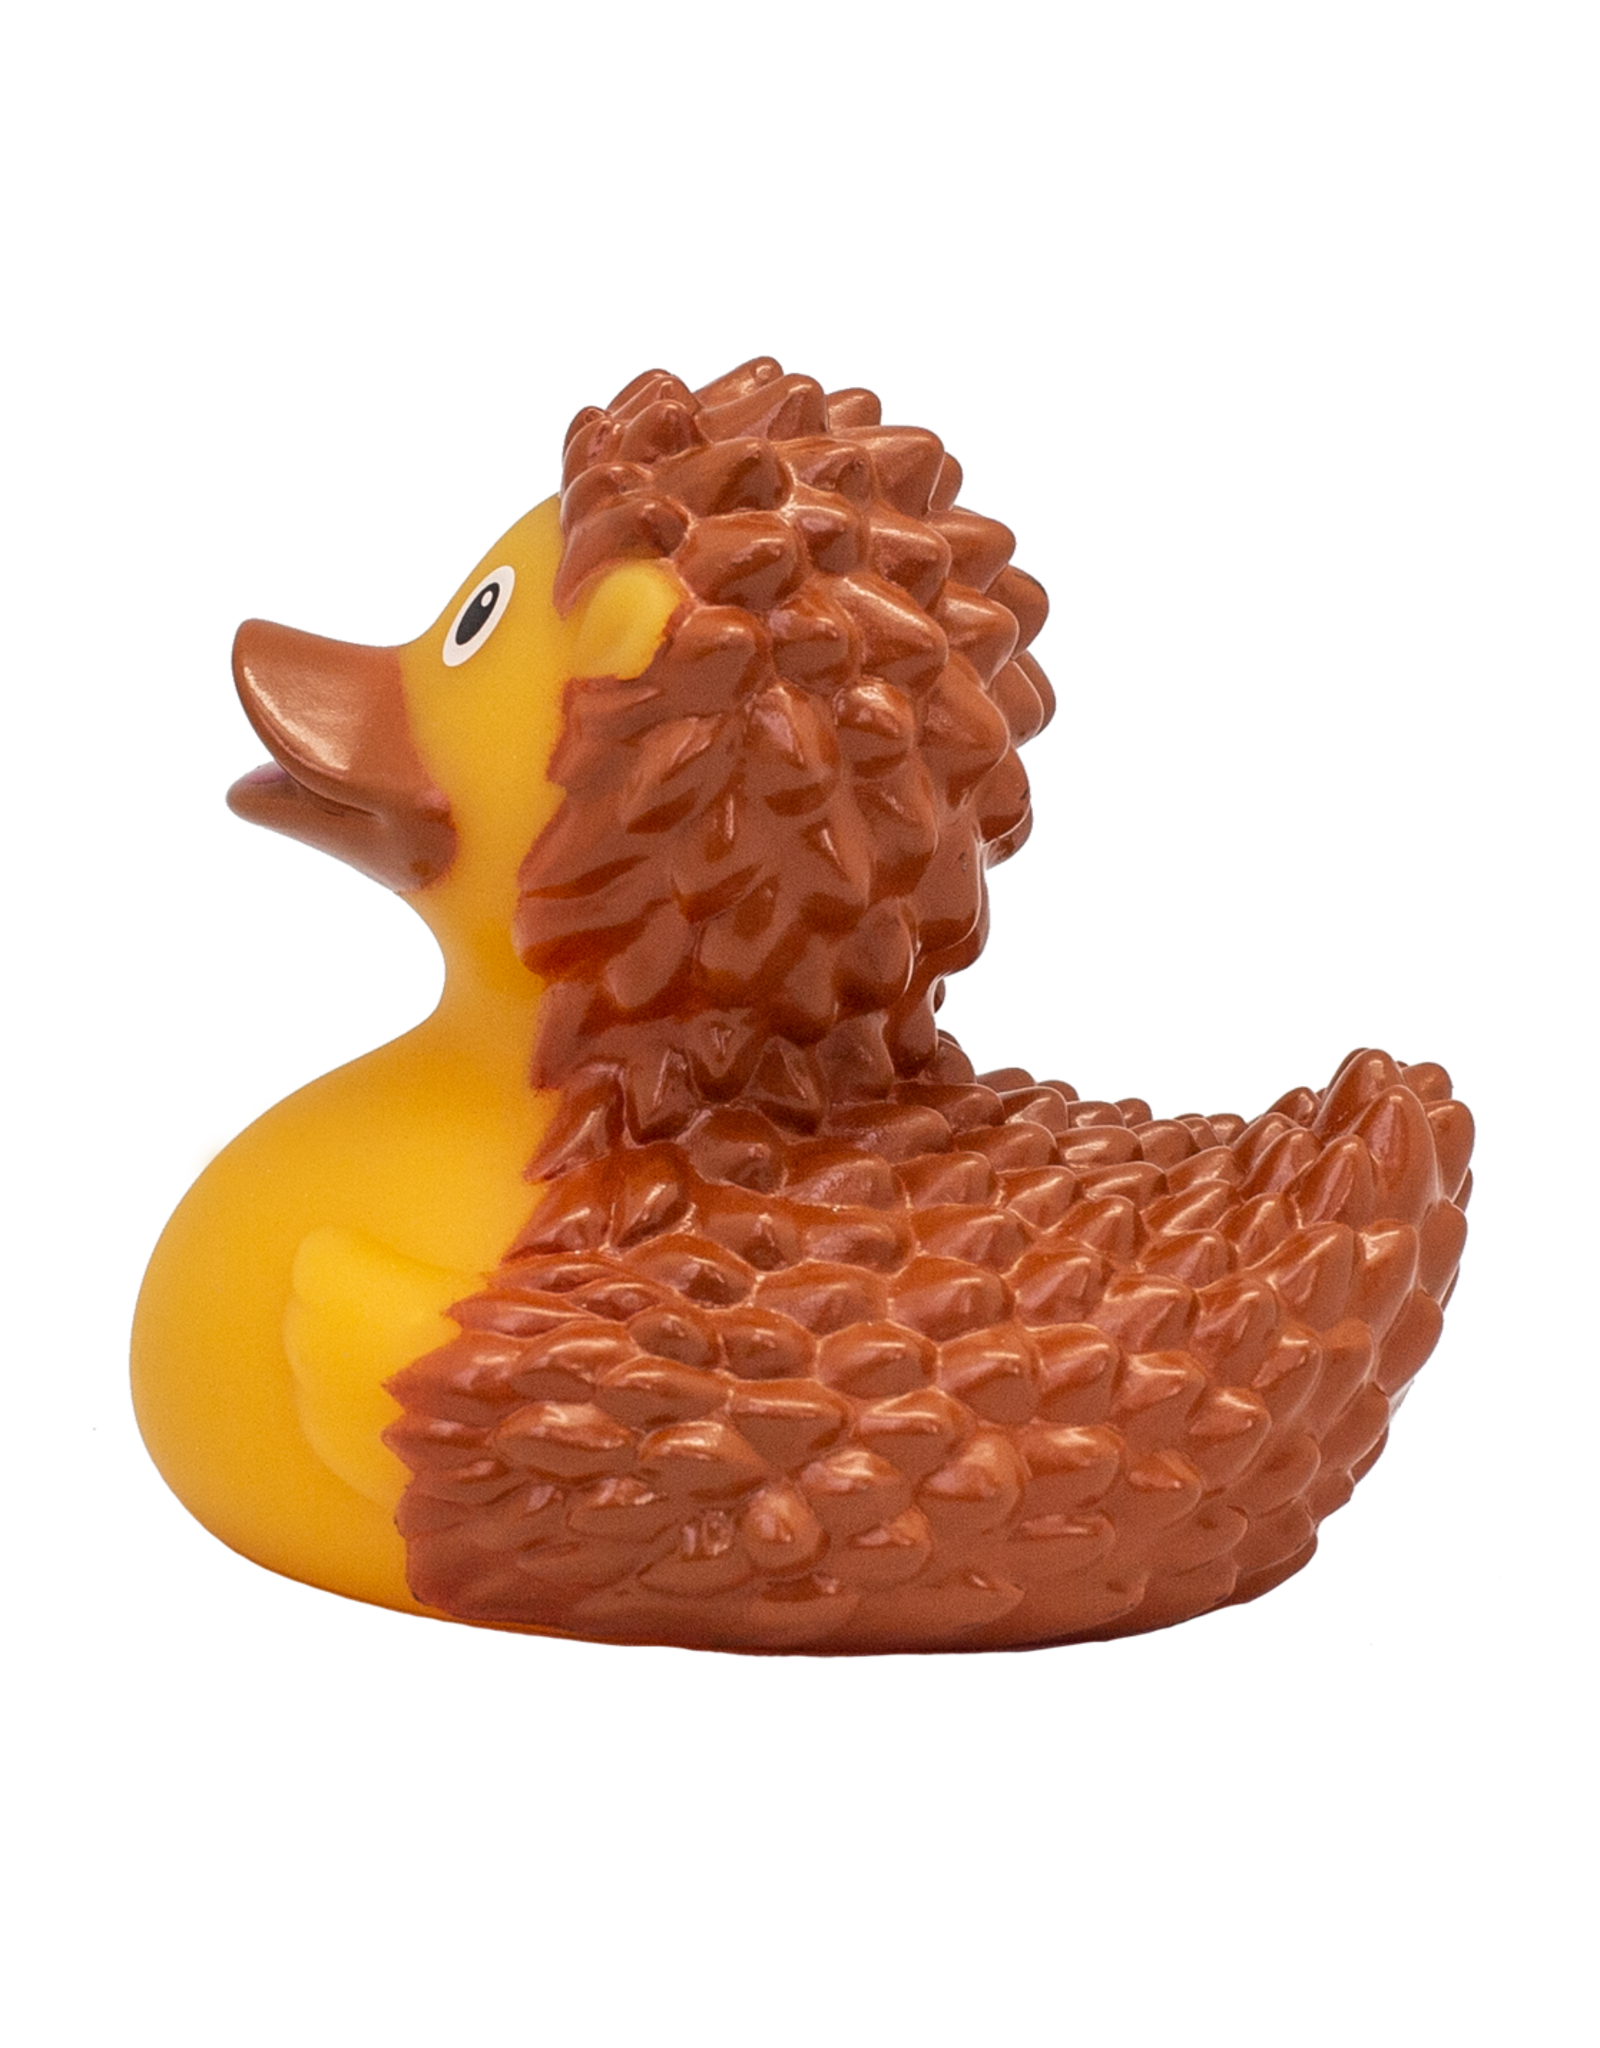 Lilalu Hedgehog Rubber Duck